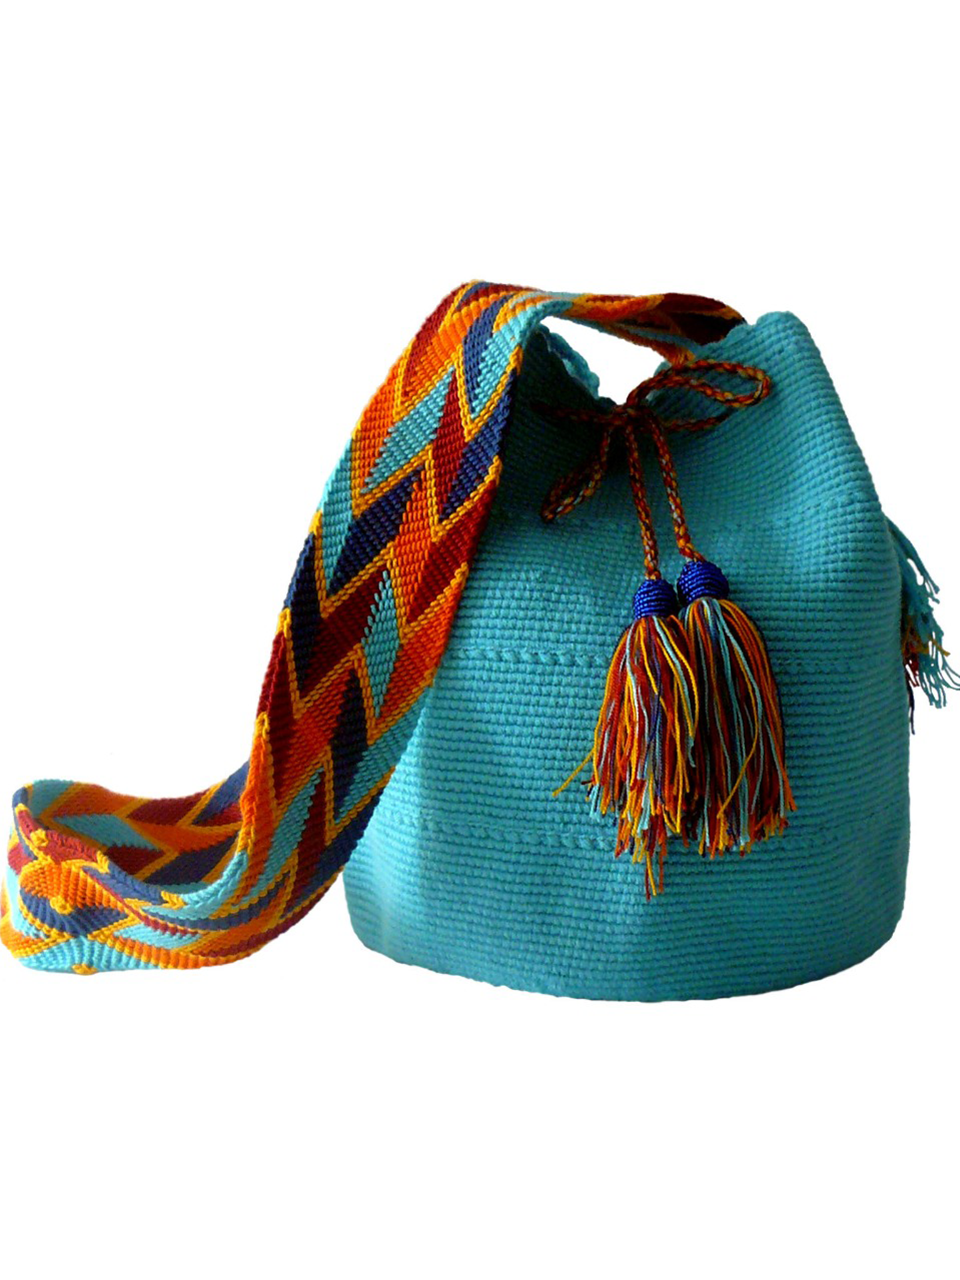 Turquoise woven shoulder bag with tassels and beads Palmazul Beachwear Wayuu Mochila